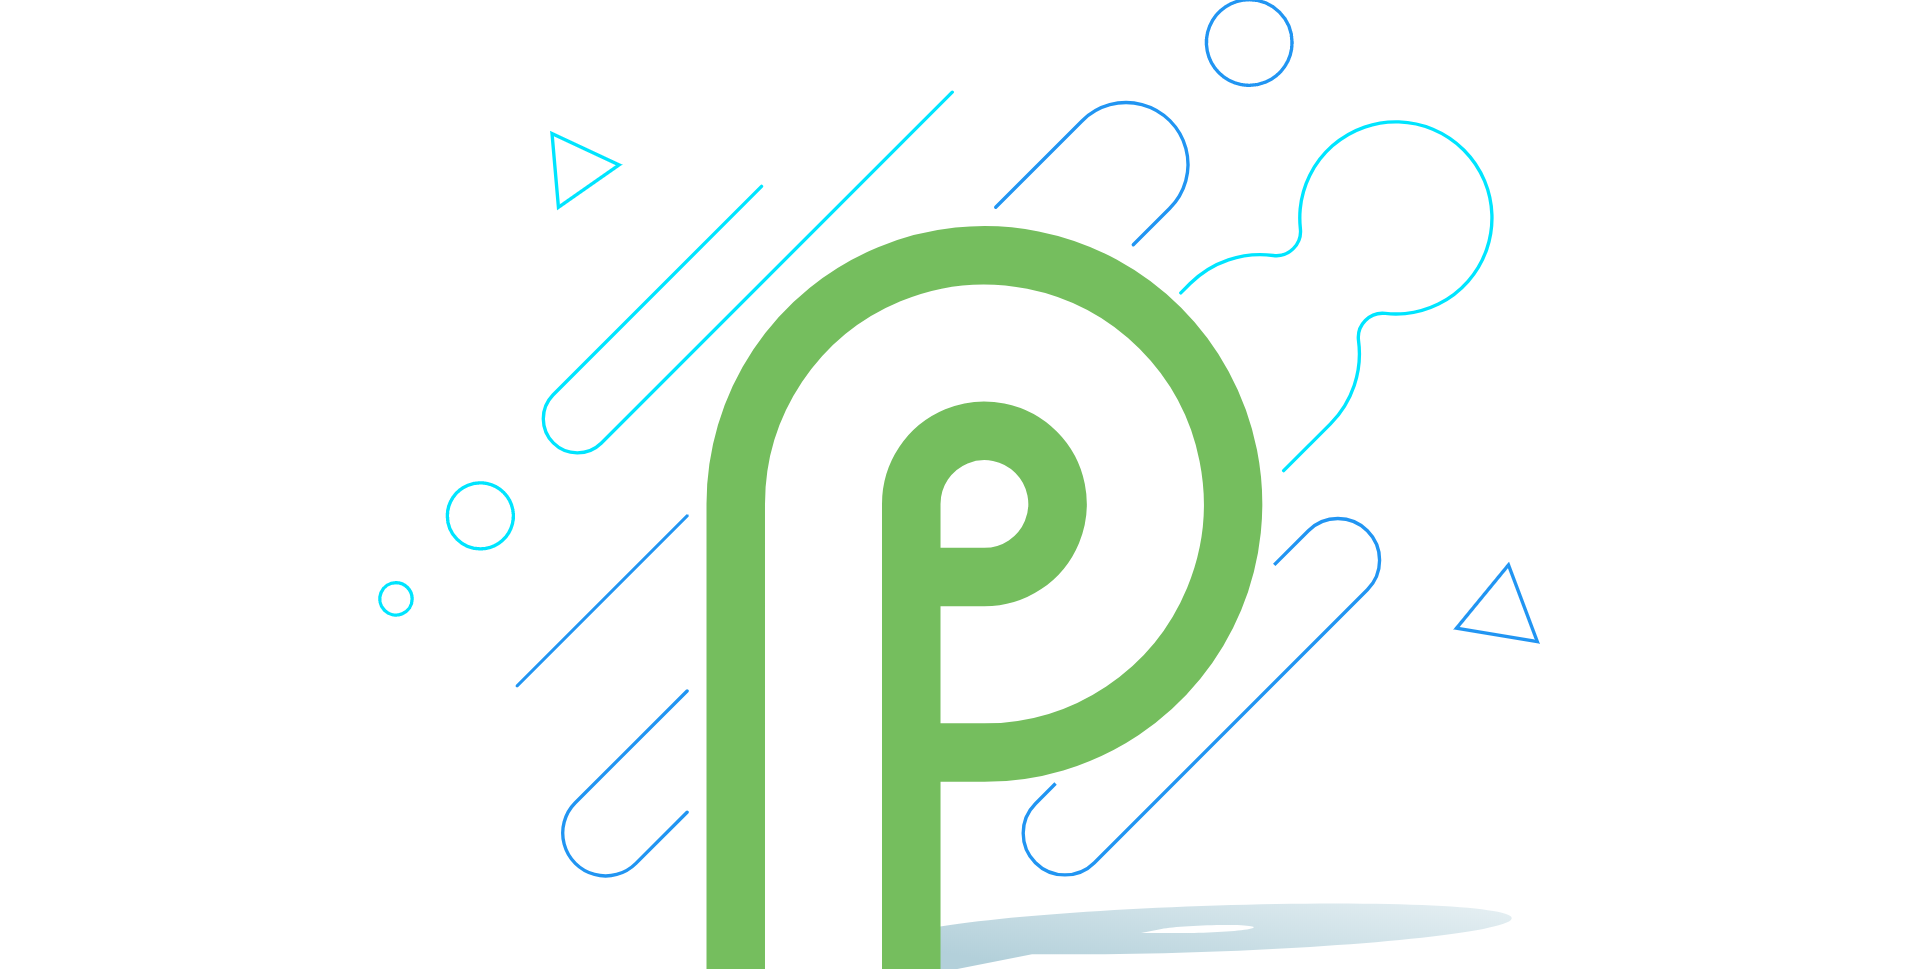 Novinky v Androidu P – drobnosti napříč systémem